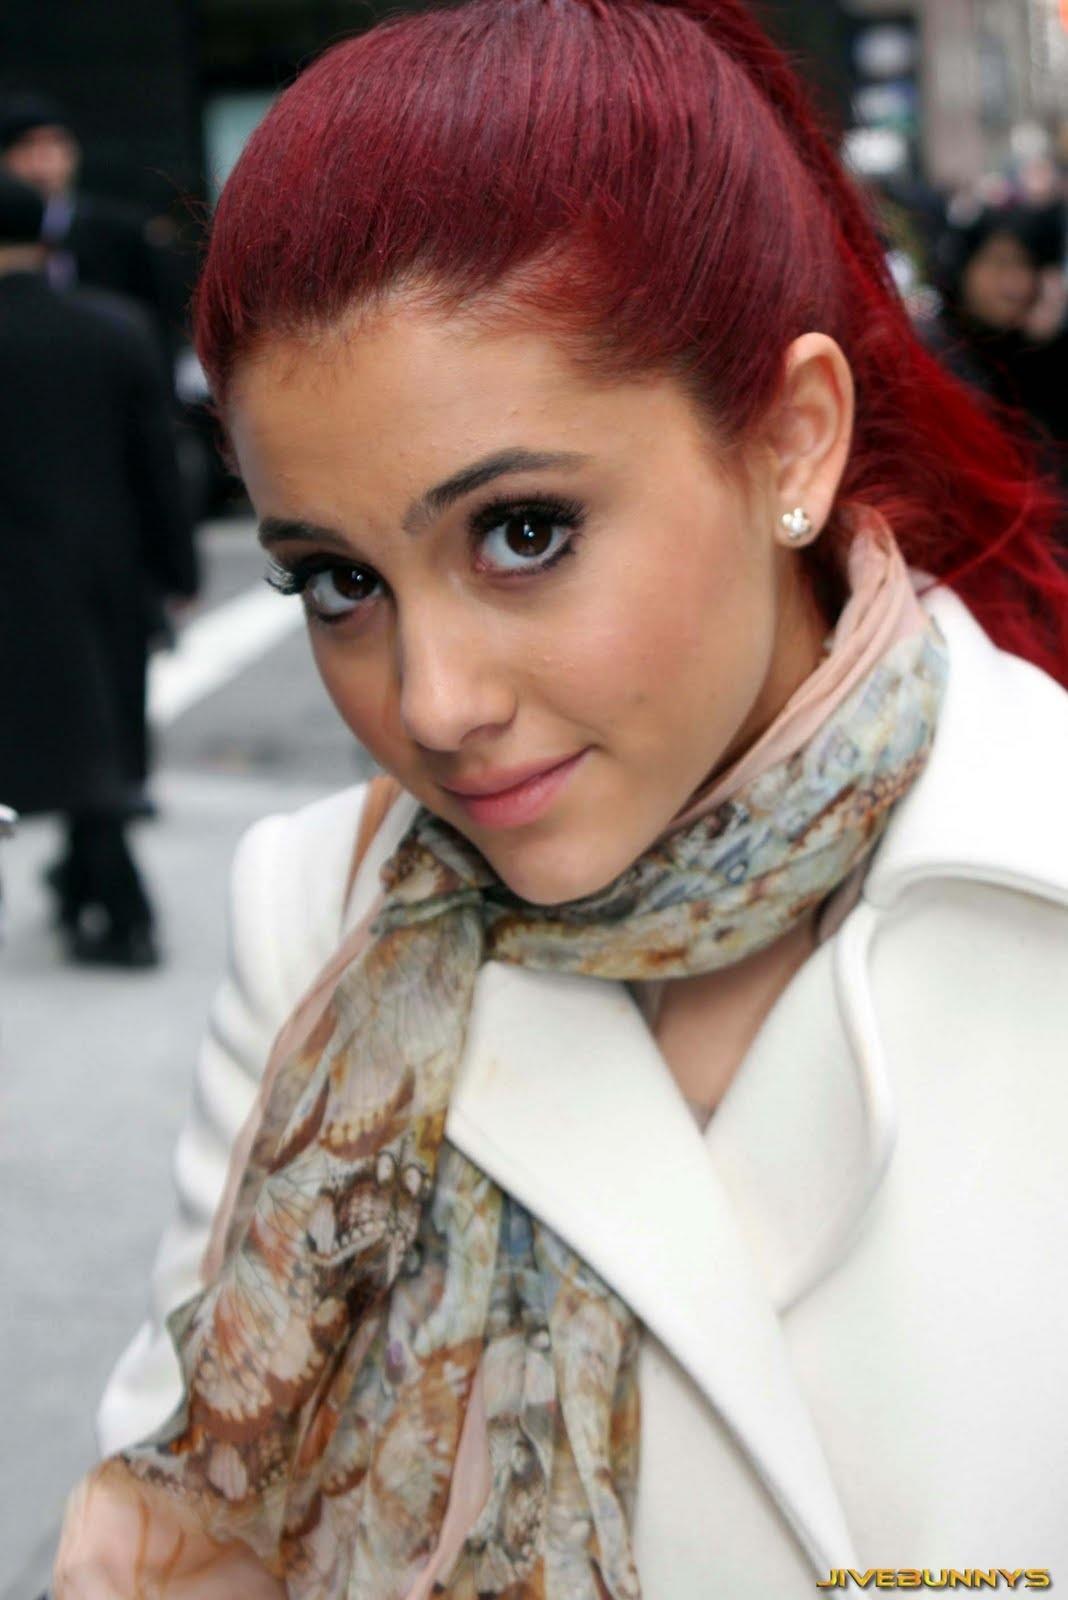 General photo of Ariana Grande